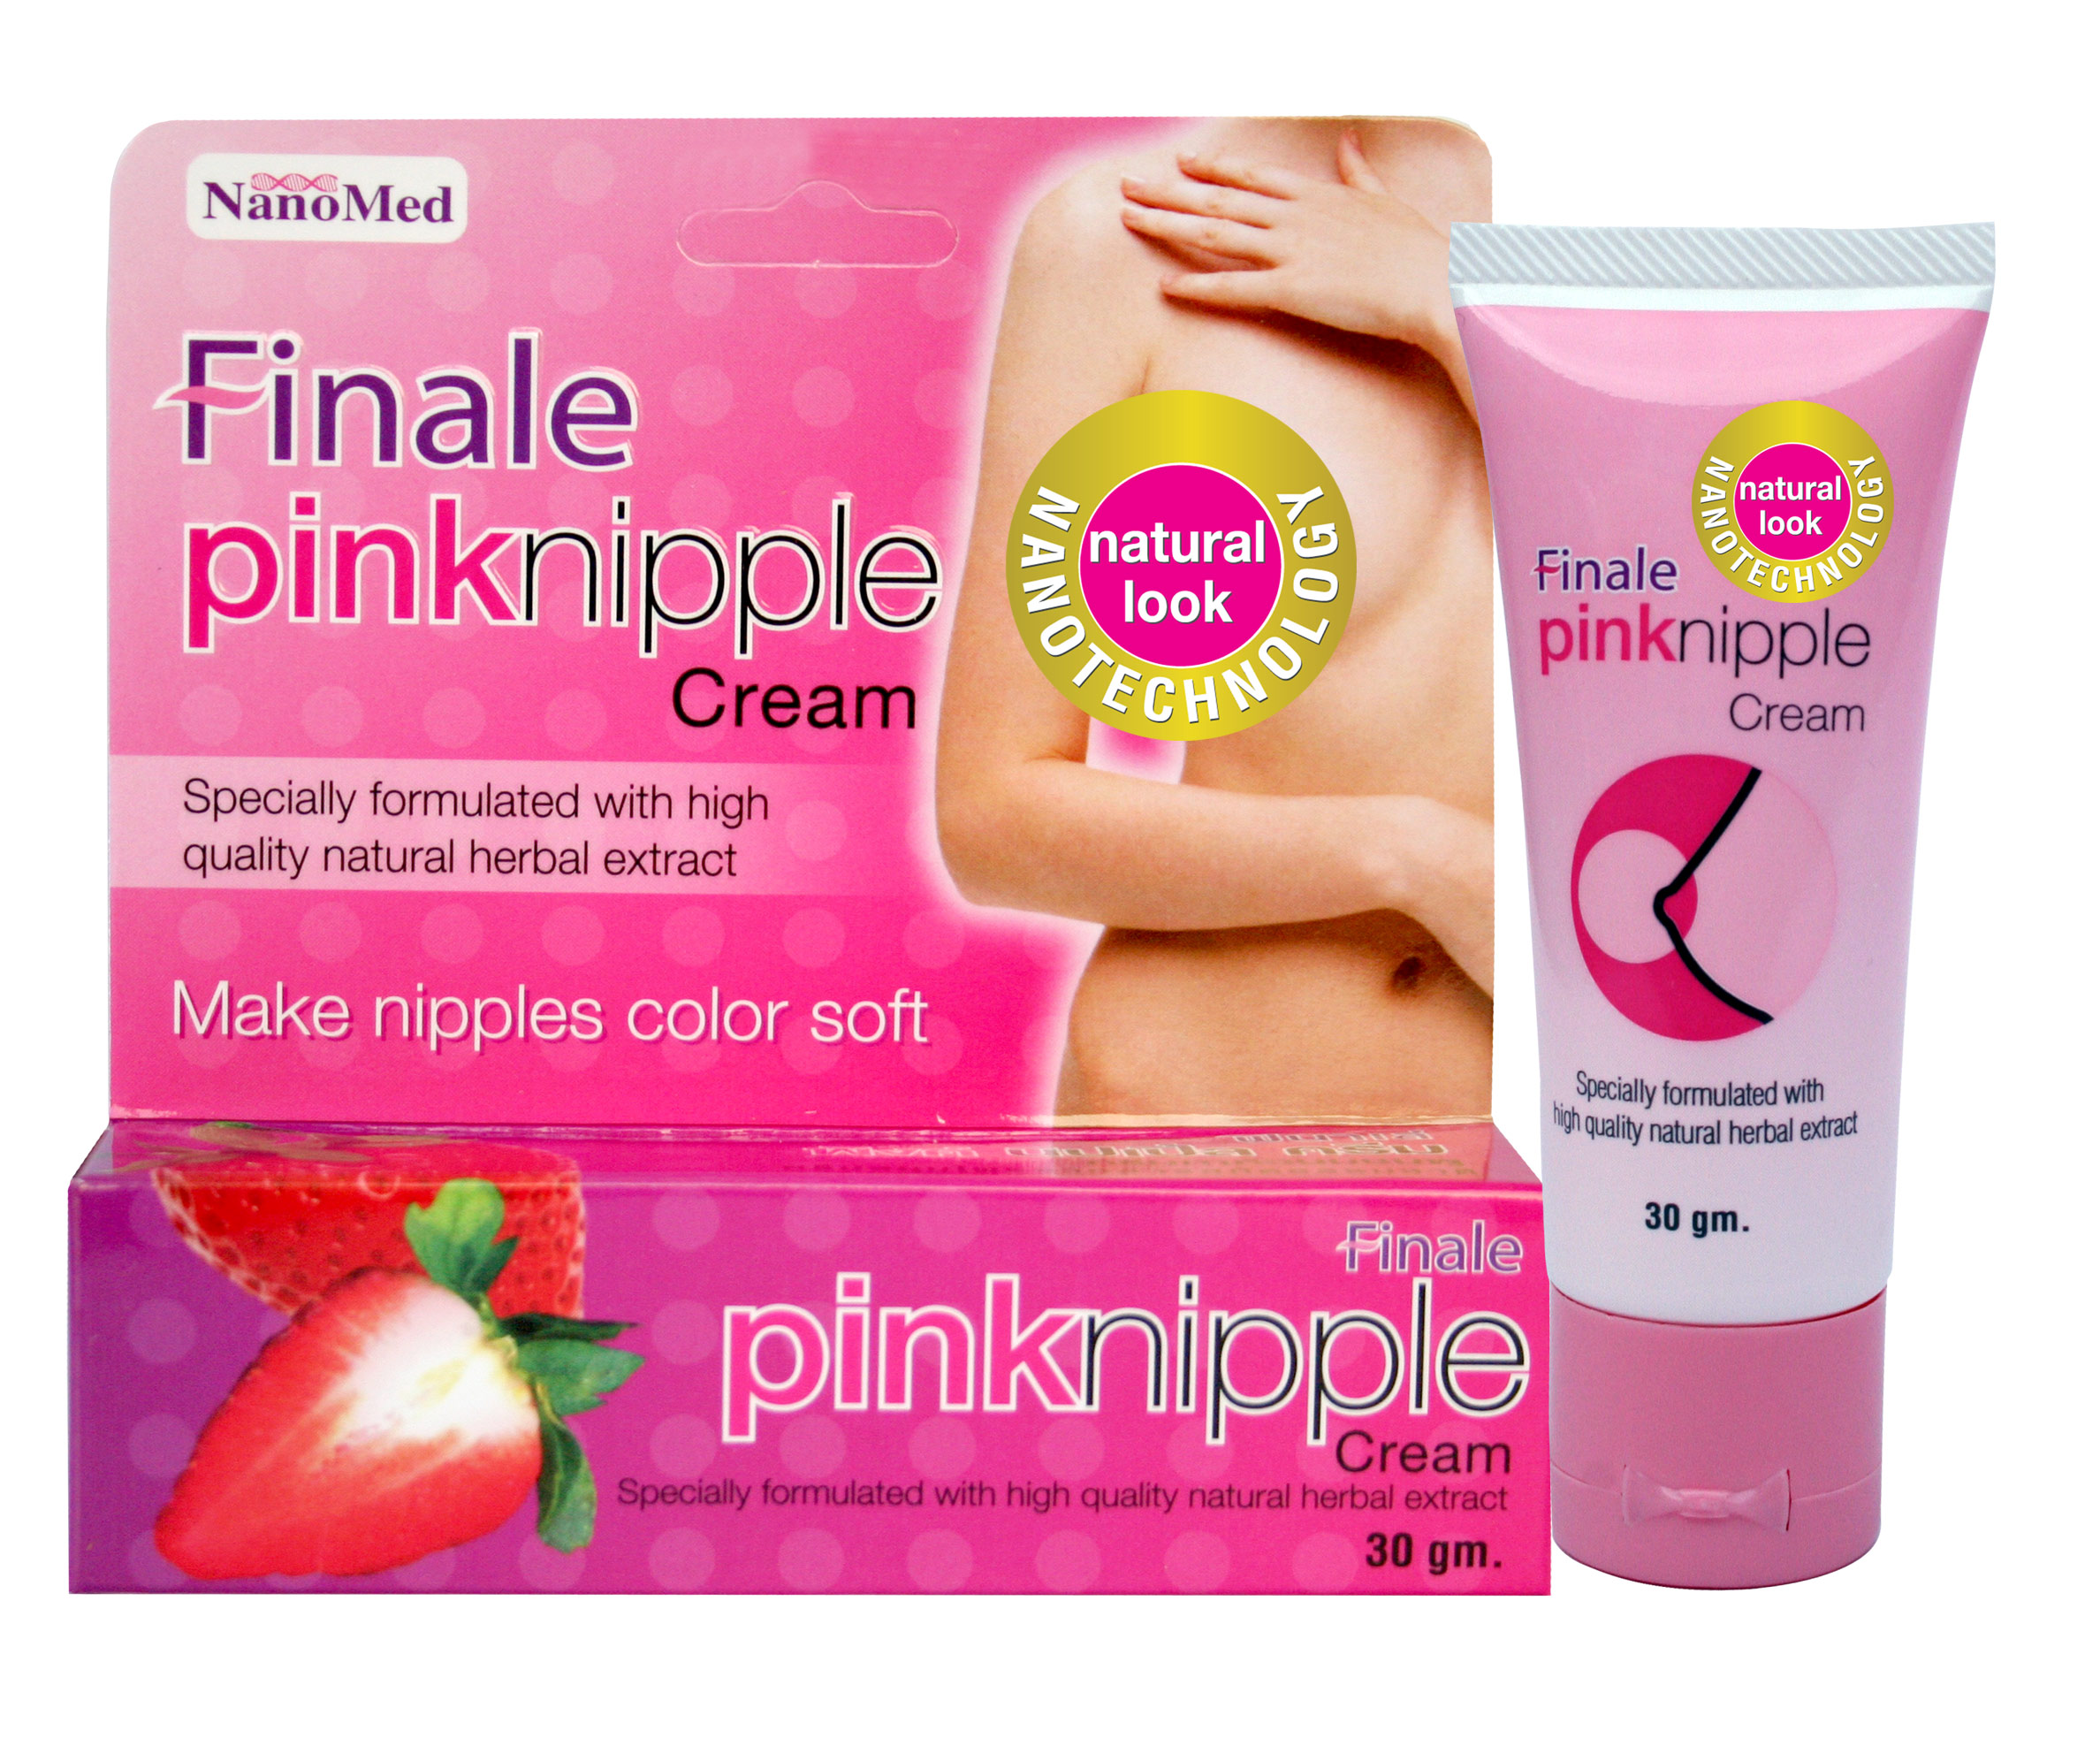 Finale Pink nipple Cream